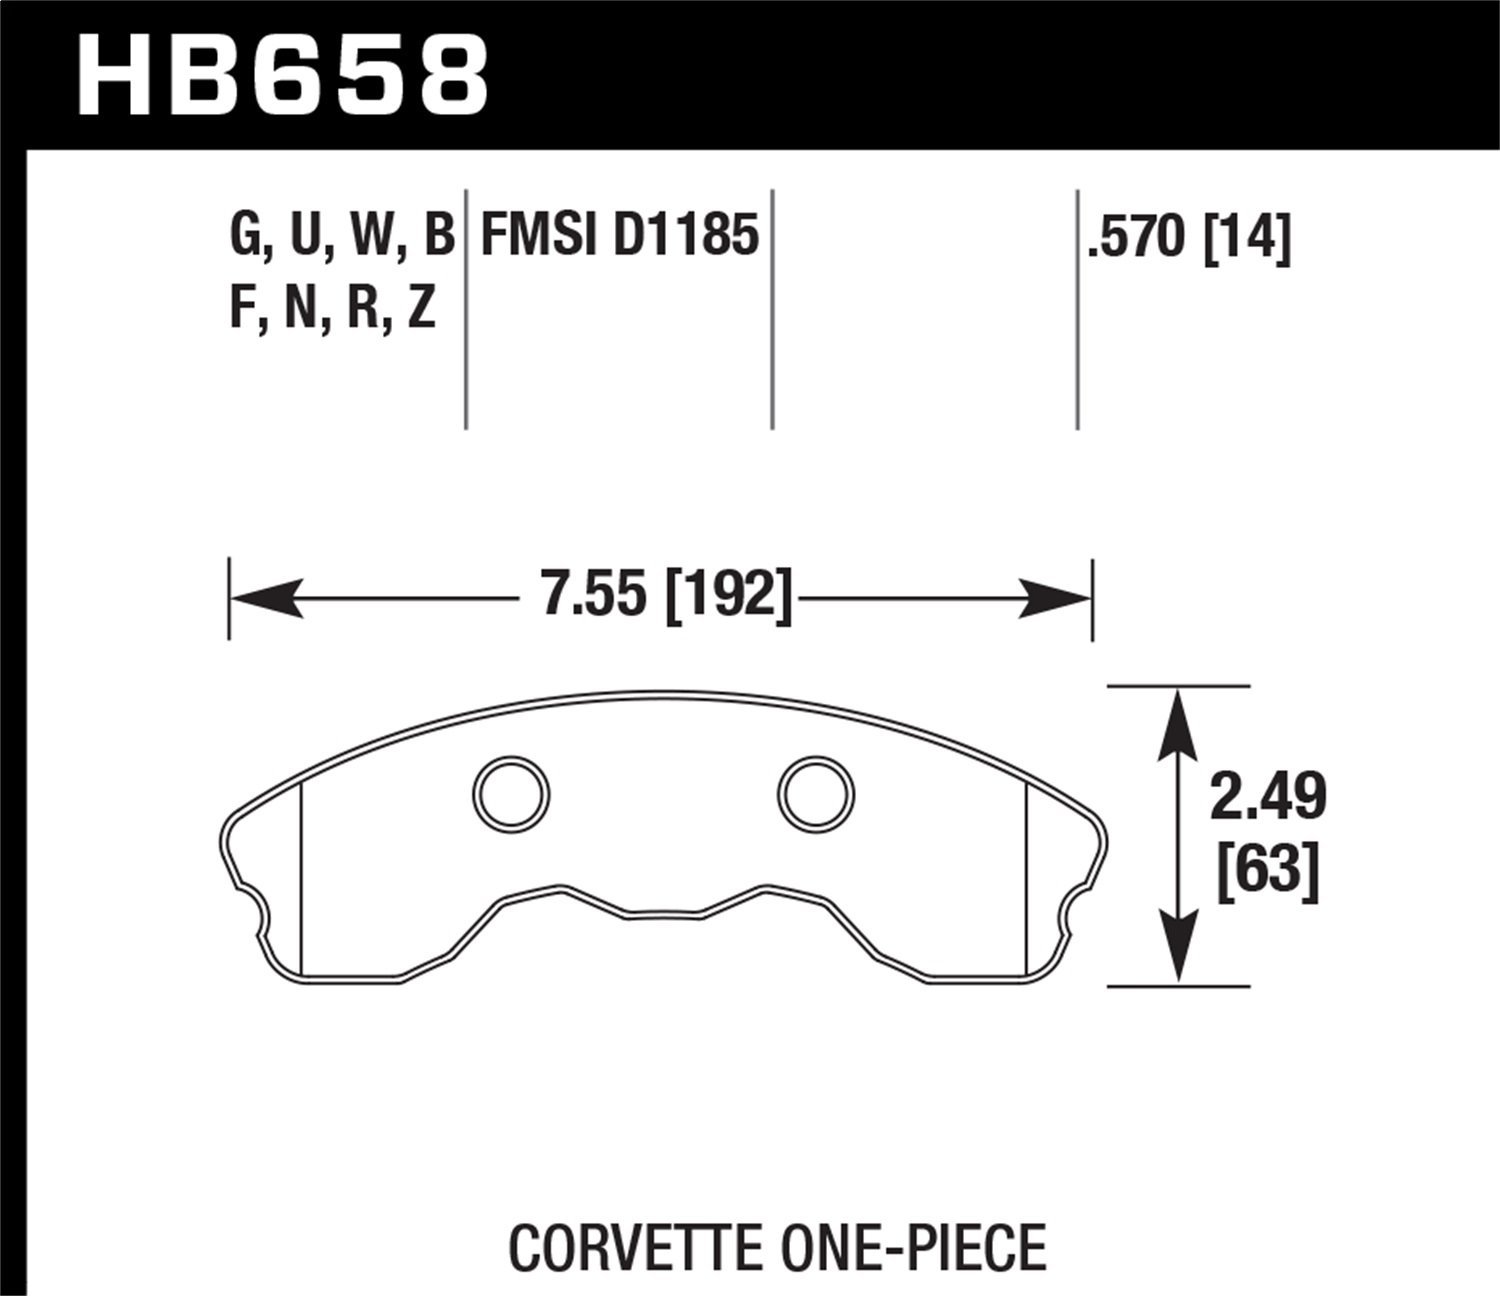 DTC-80 BRAKE PADS Corvette 1-pc Front